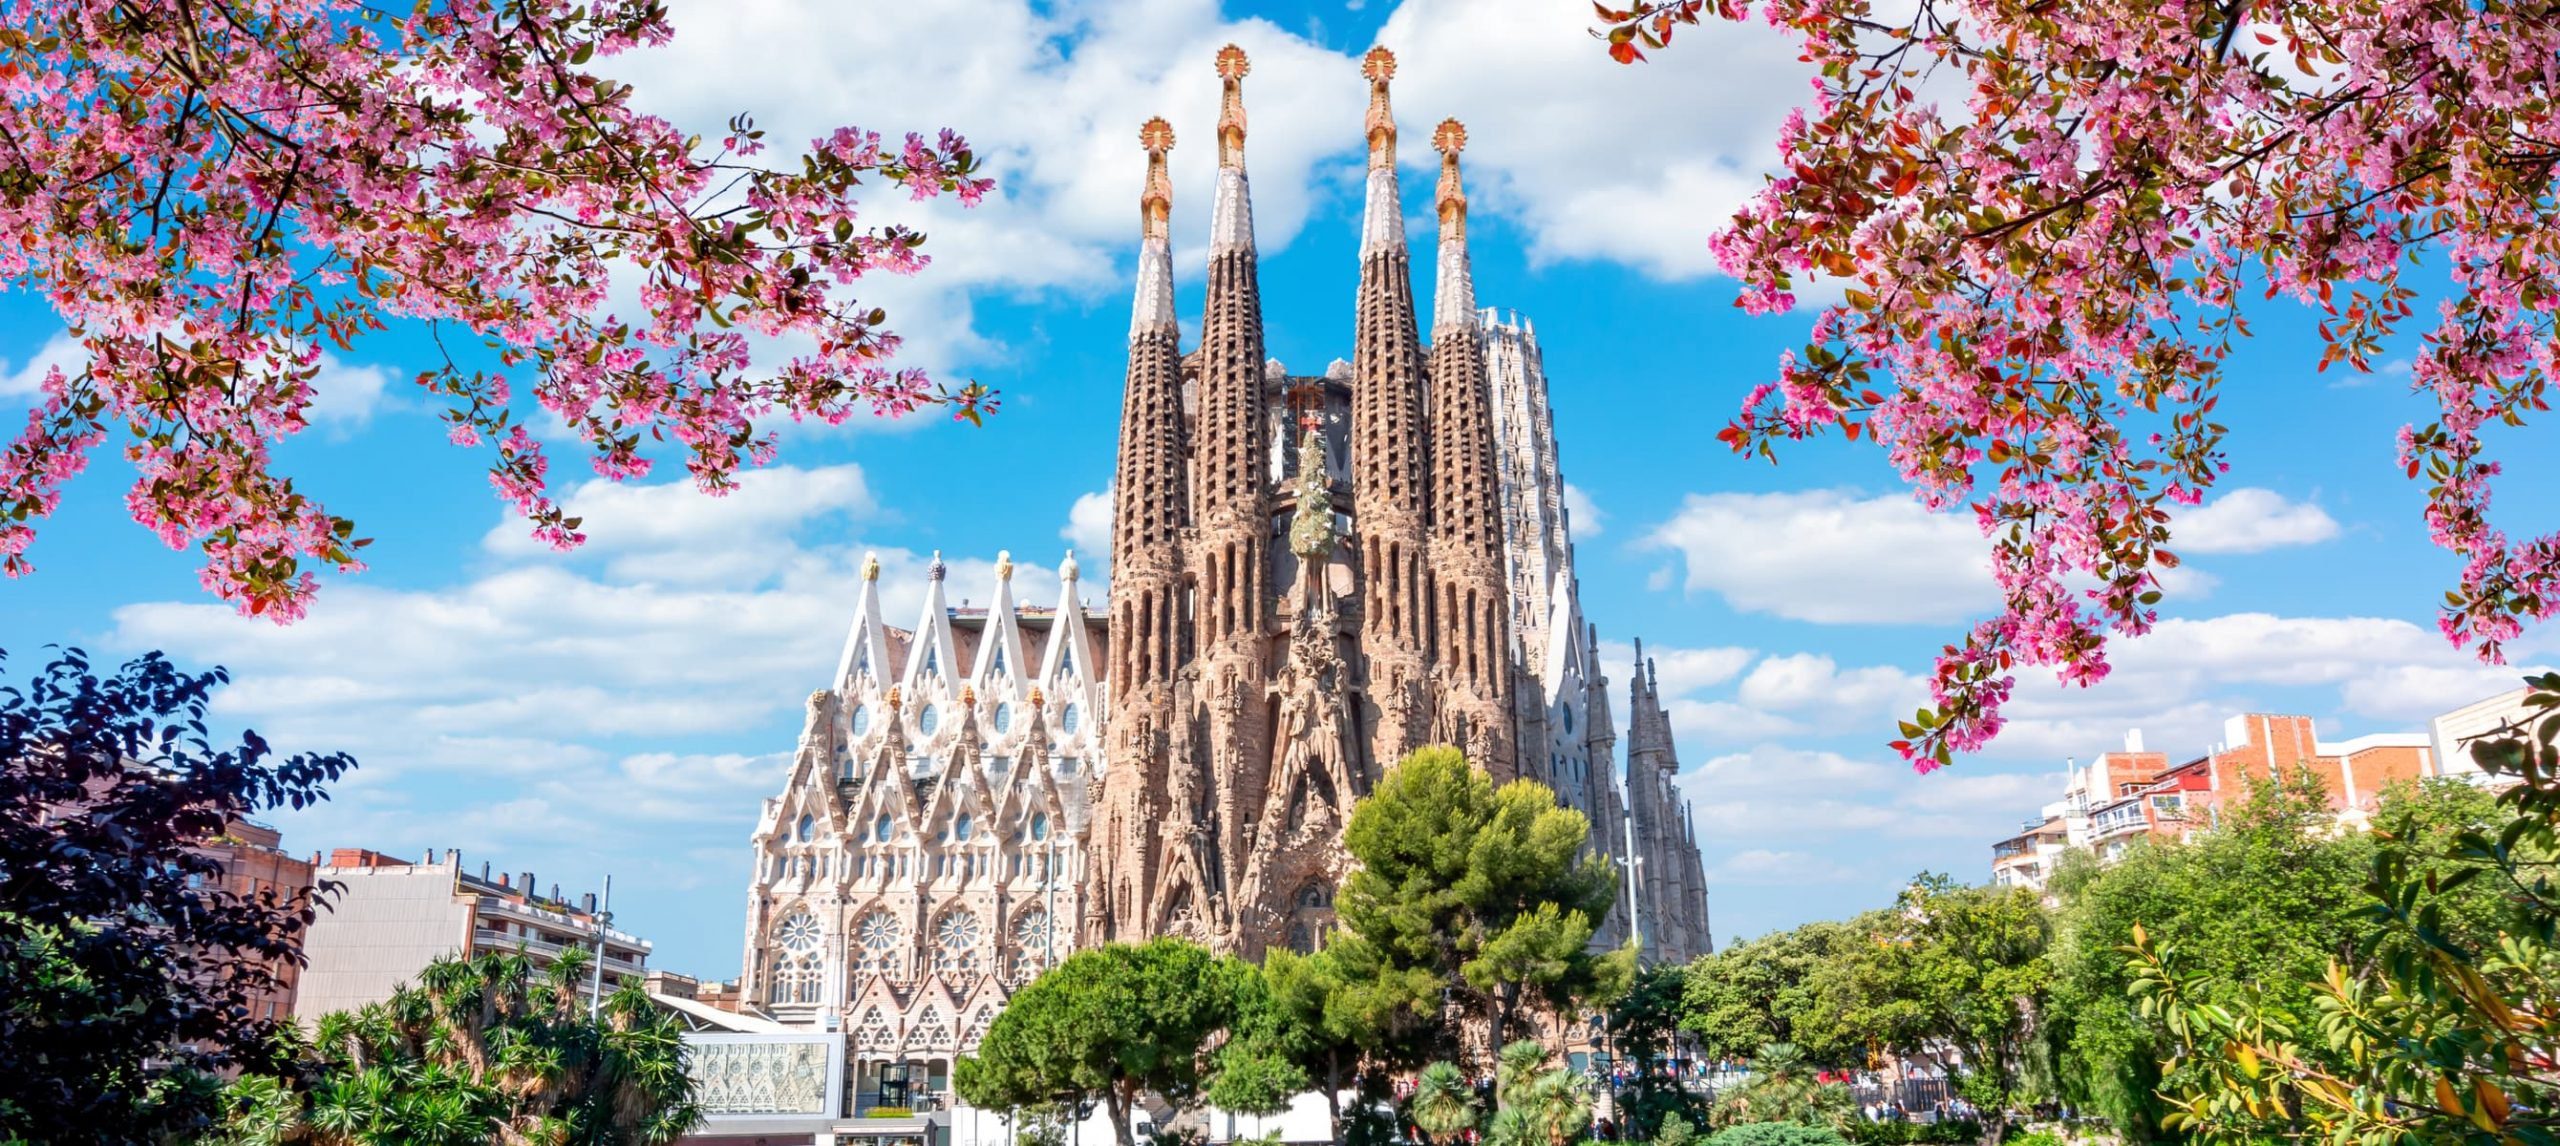 La Sagrada Familia Basilica during spring in Barcelona.